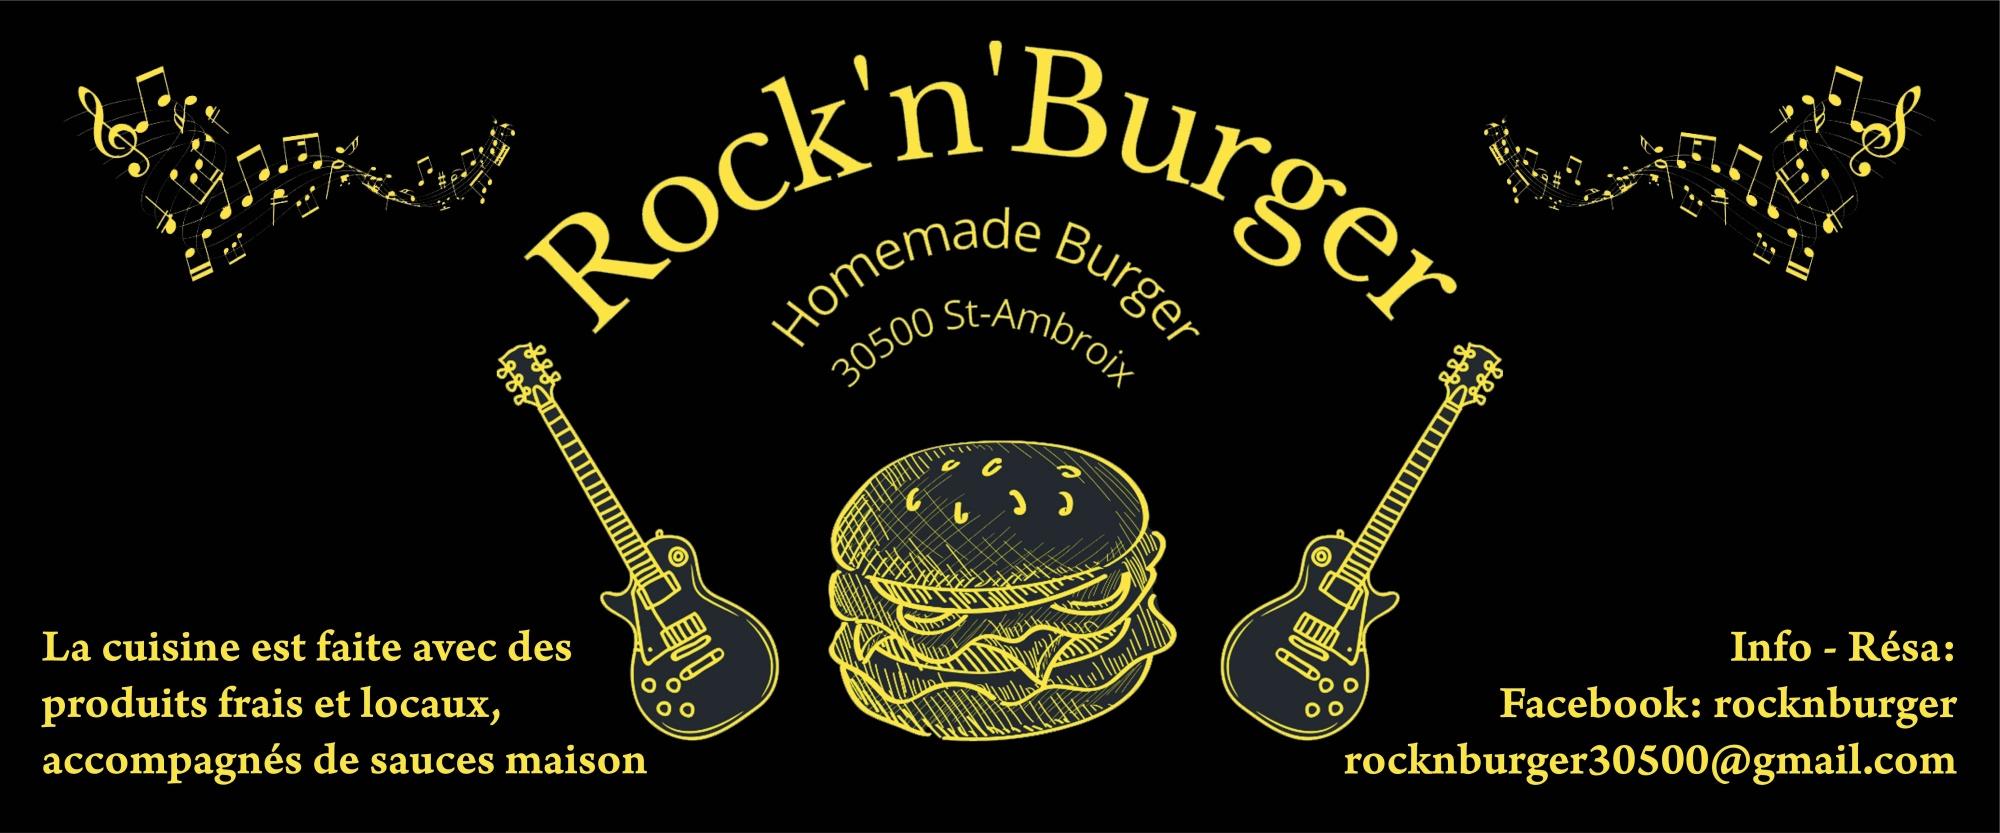 Rock'n'burger Saint Ambroix